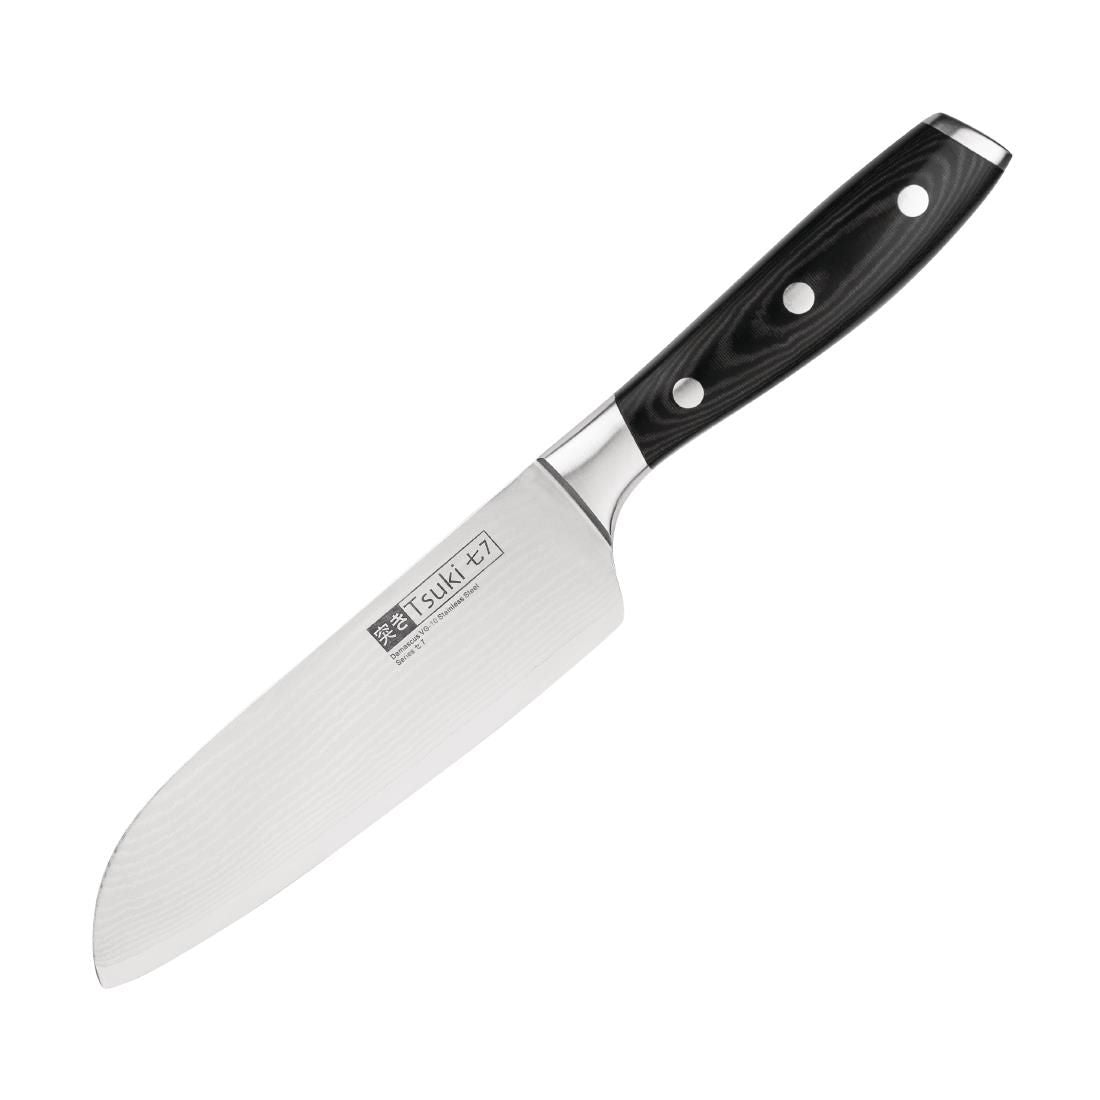 Tsuki Series 7 Santoku Knife 18cm